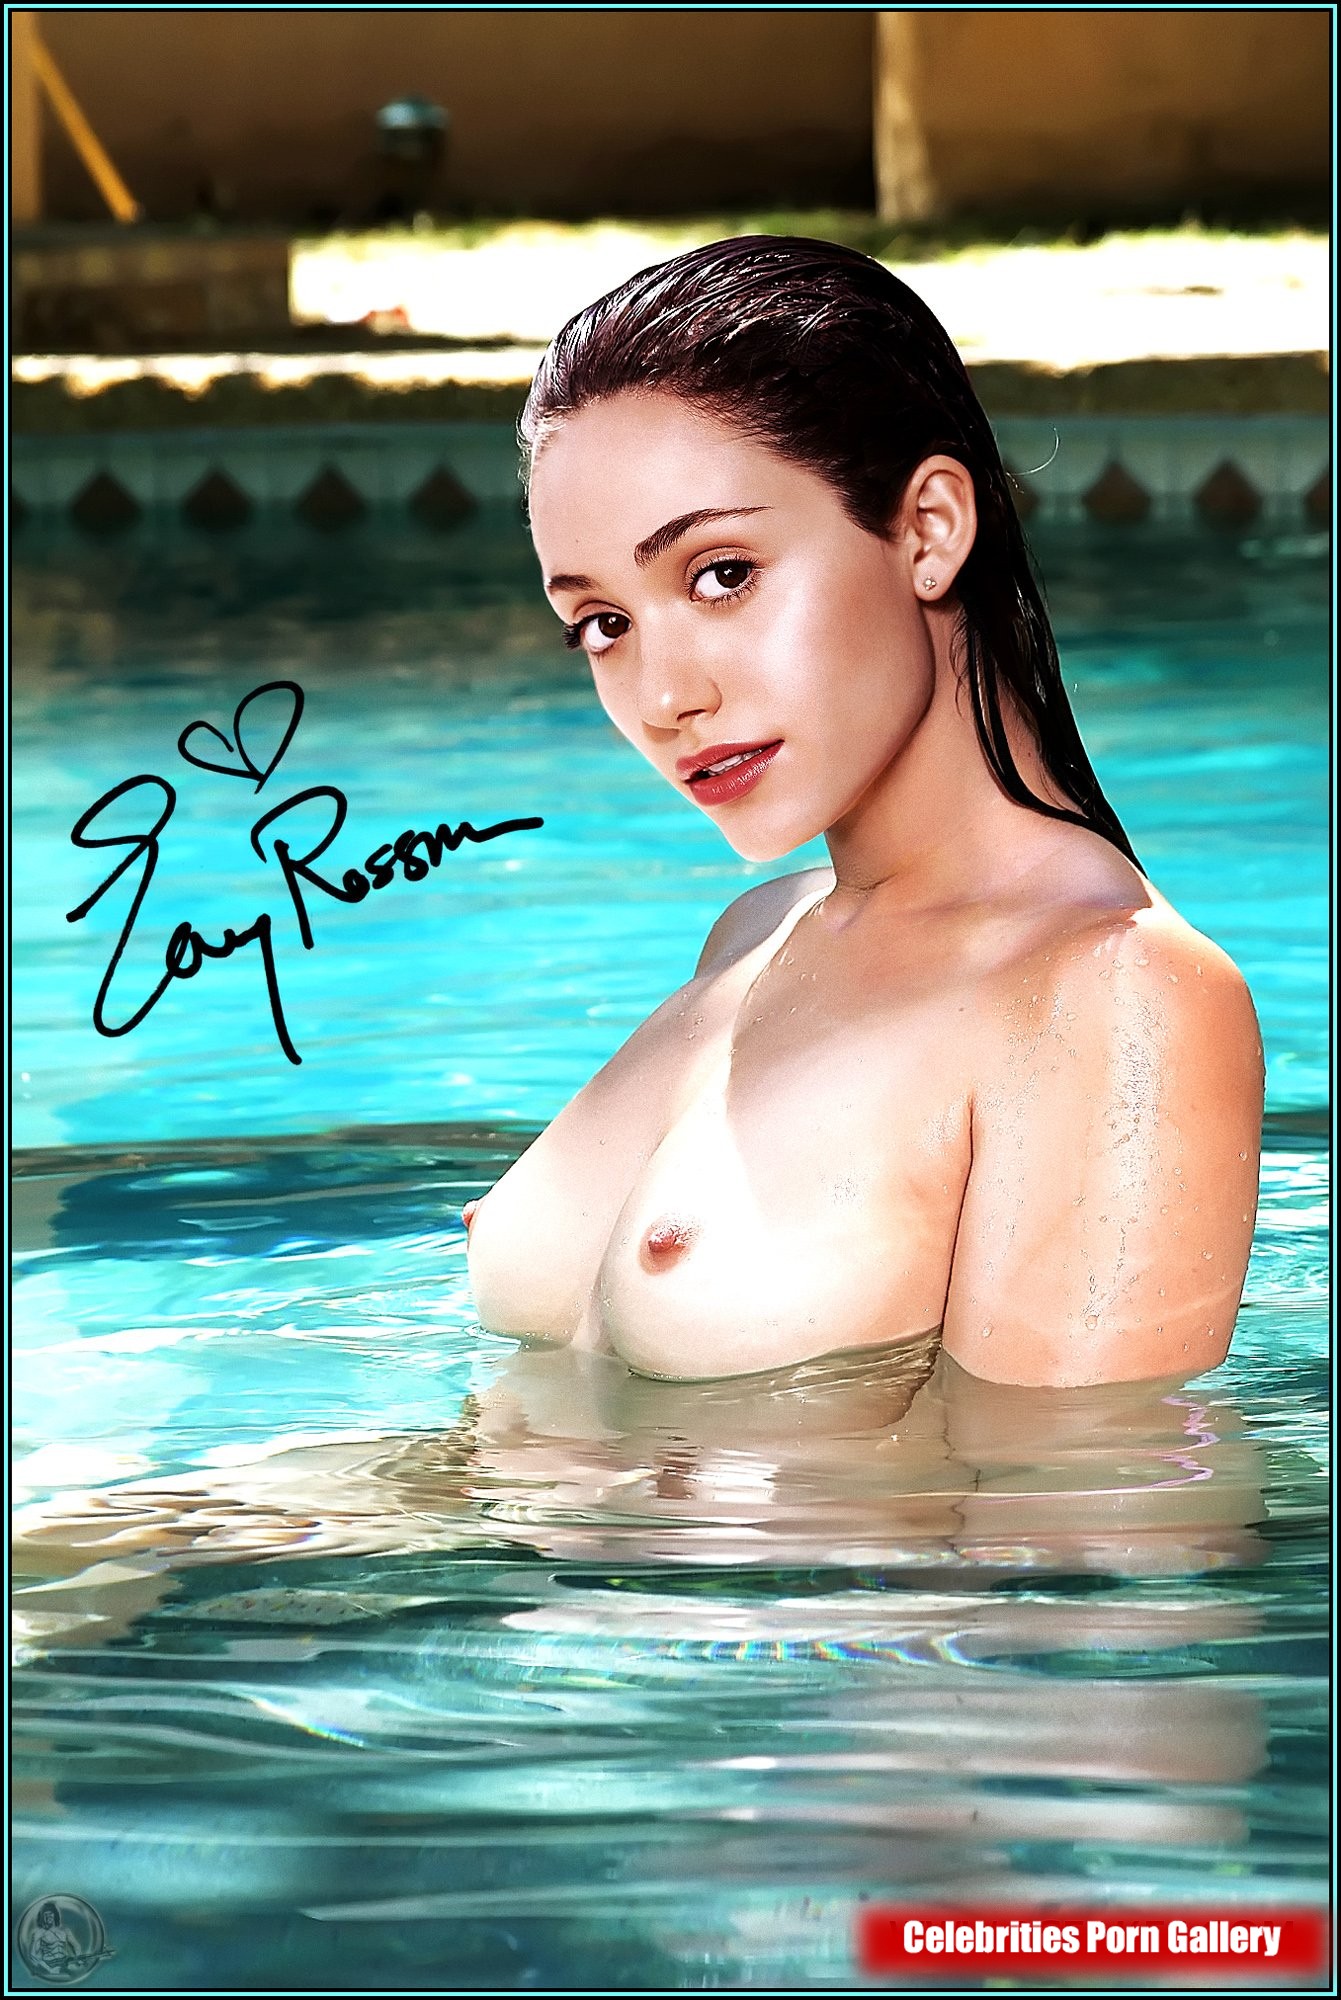 Emmy-Rossum-celebrity-nude-img-007